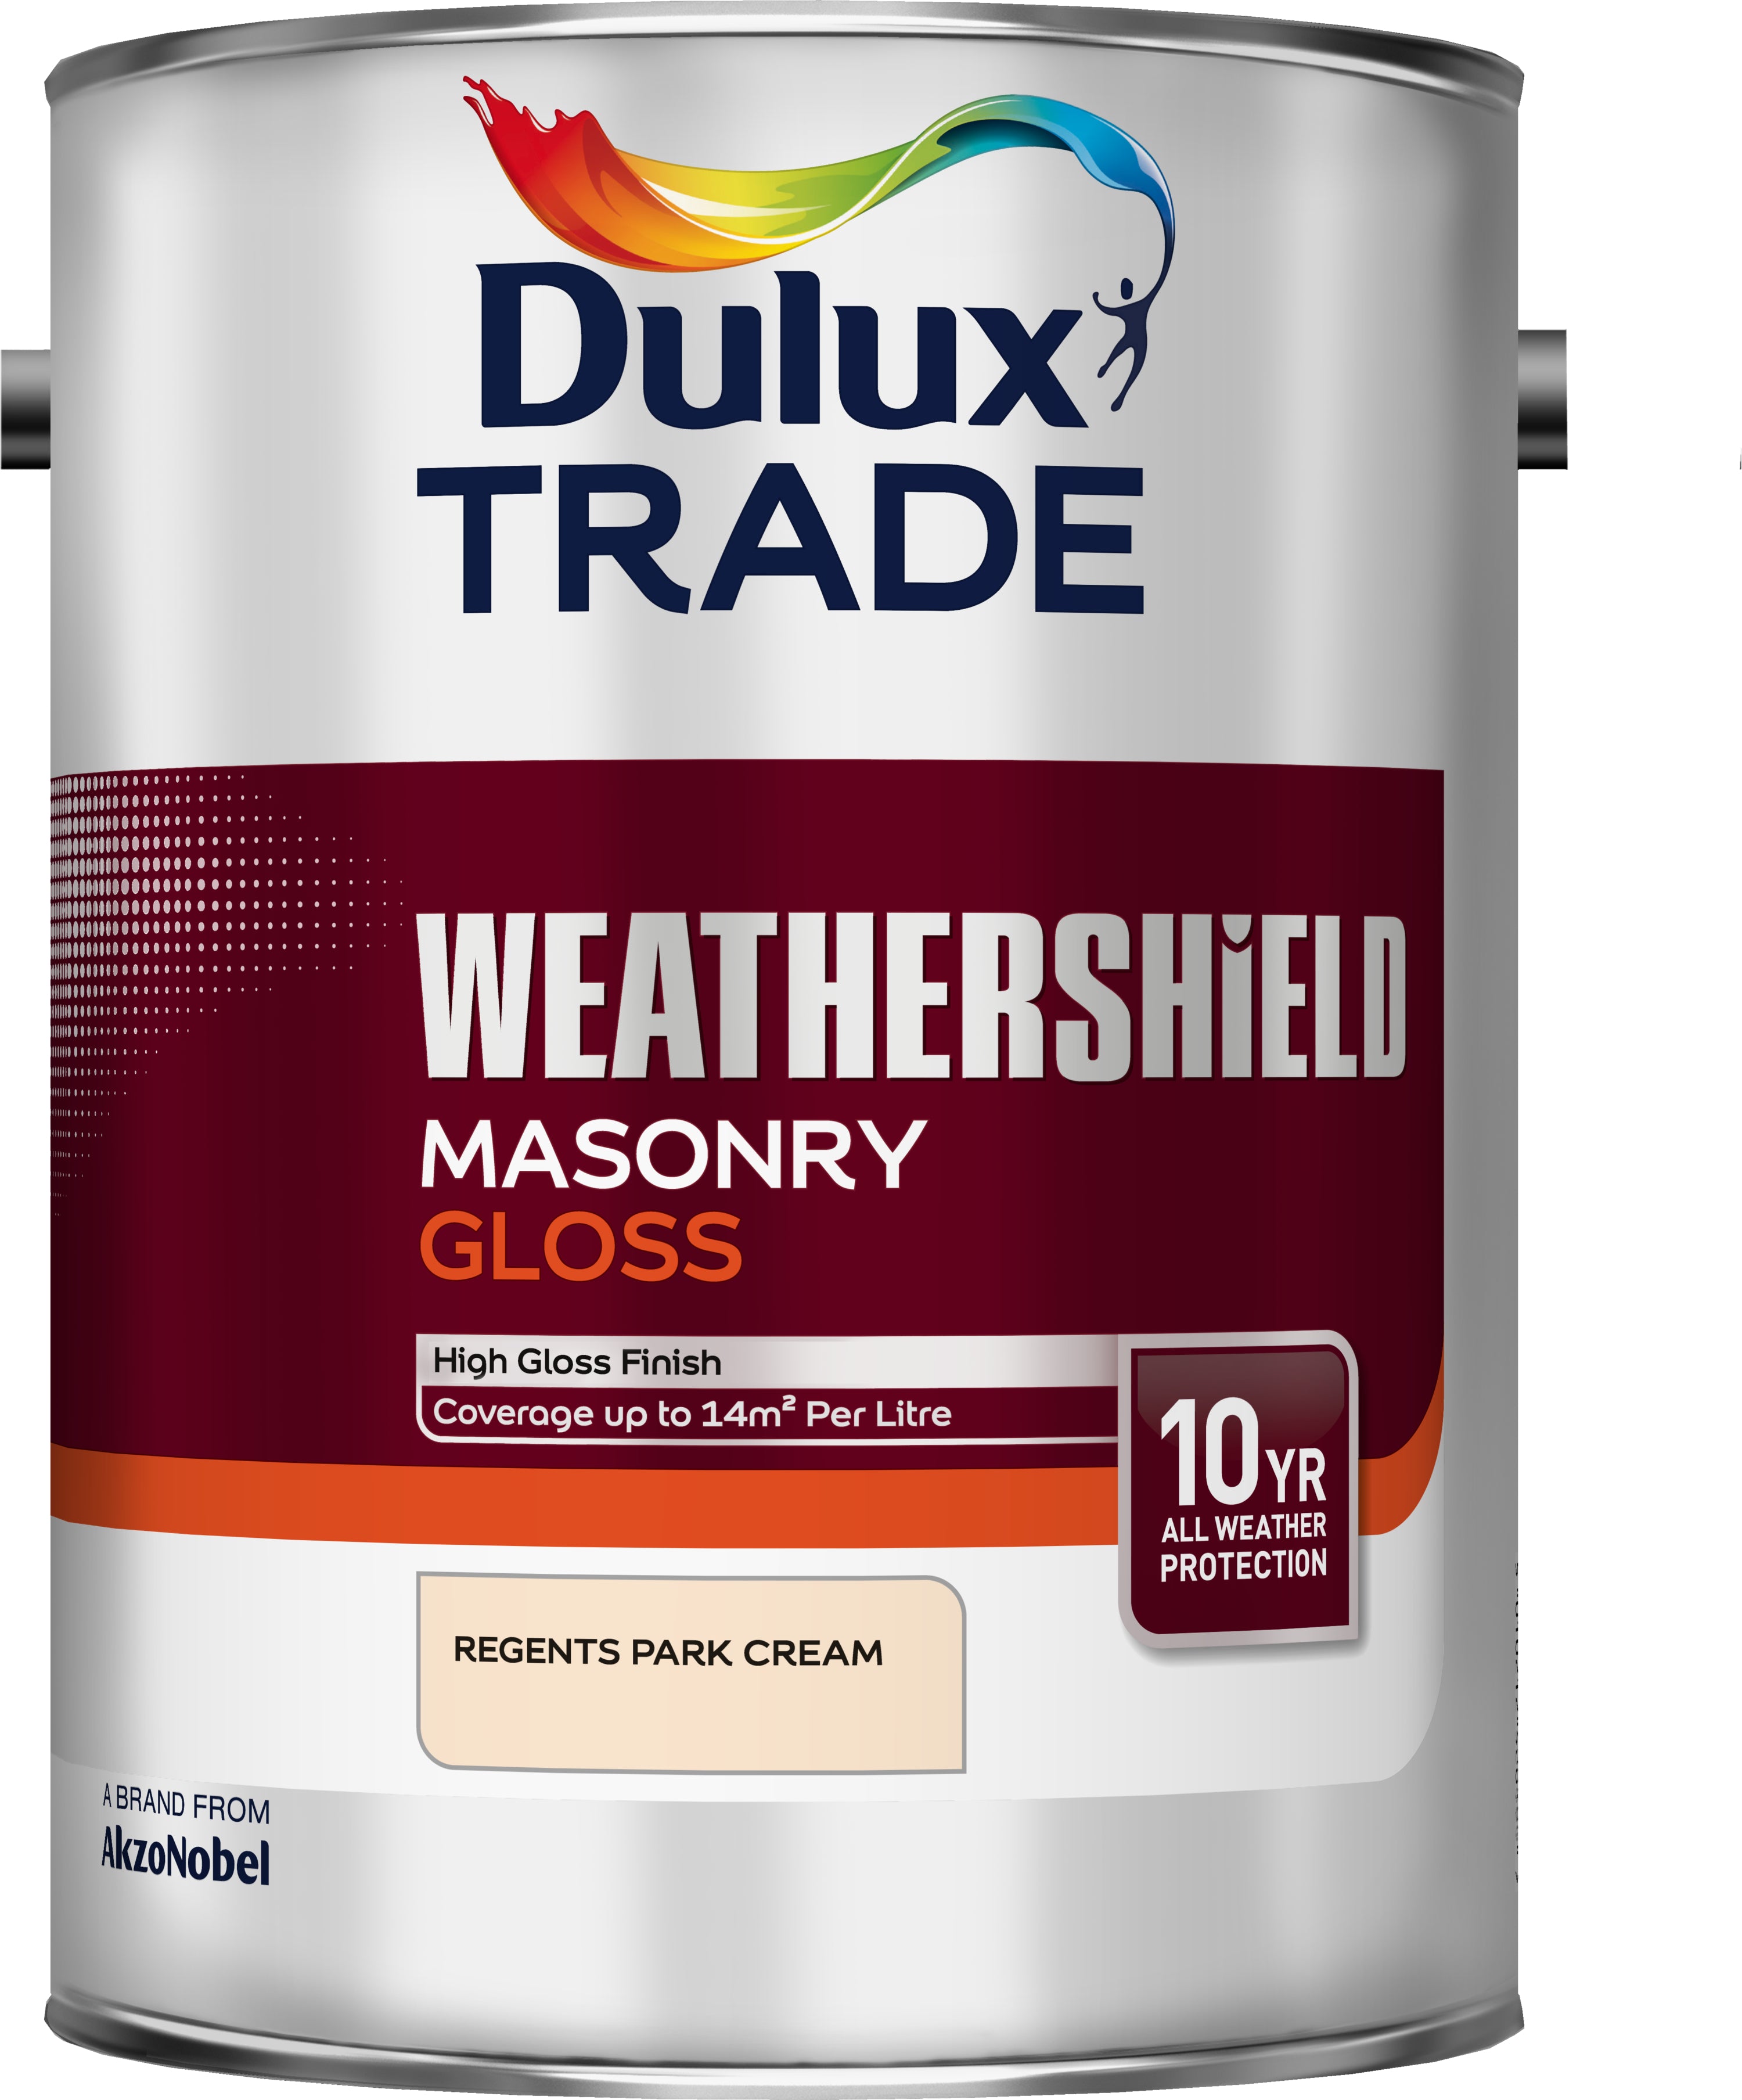 Dulux Trade Weathershield Masonry Gloss Regents Park Cream 5L